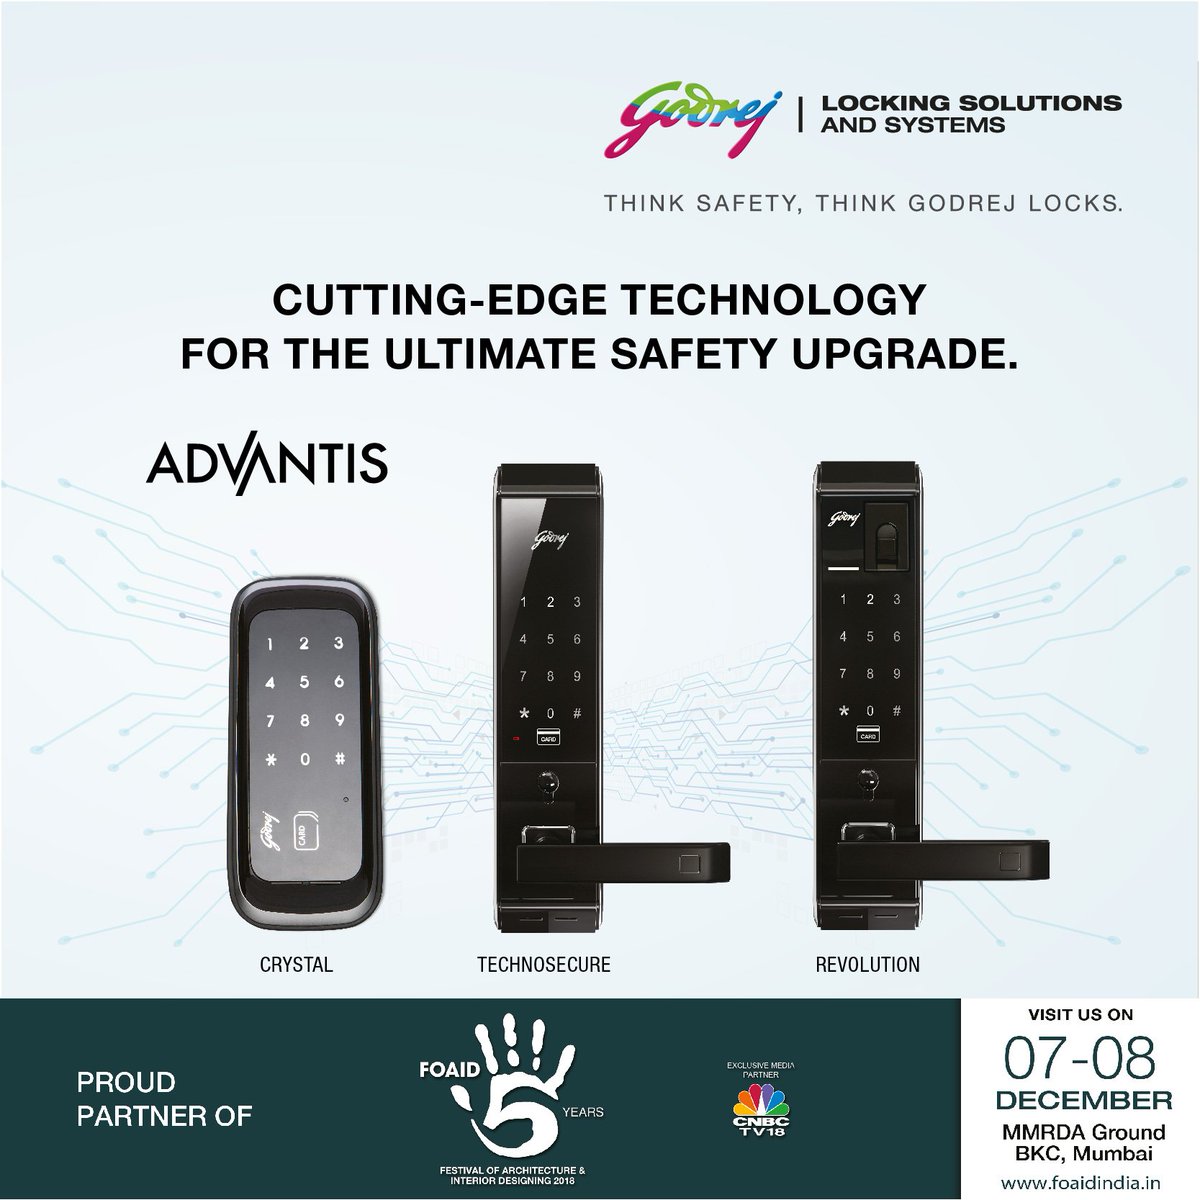 Cutting – Edge Technology for the ultimate safety upgrade.
@GodrejLocksS 

#GodrejLocks #LockingSolutions #Advantis #Architecture #Architect #InteriorDesign #Technolog #Safety #Decor #Buildings #FOAID2018 #FOAID #Creative #Exhibition #Conference #India #Mumbai #Seminar